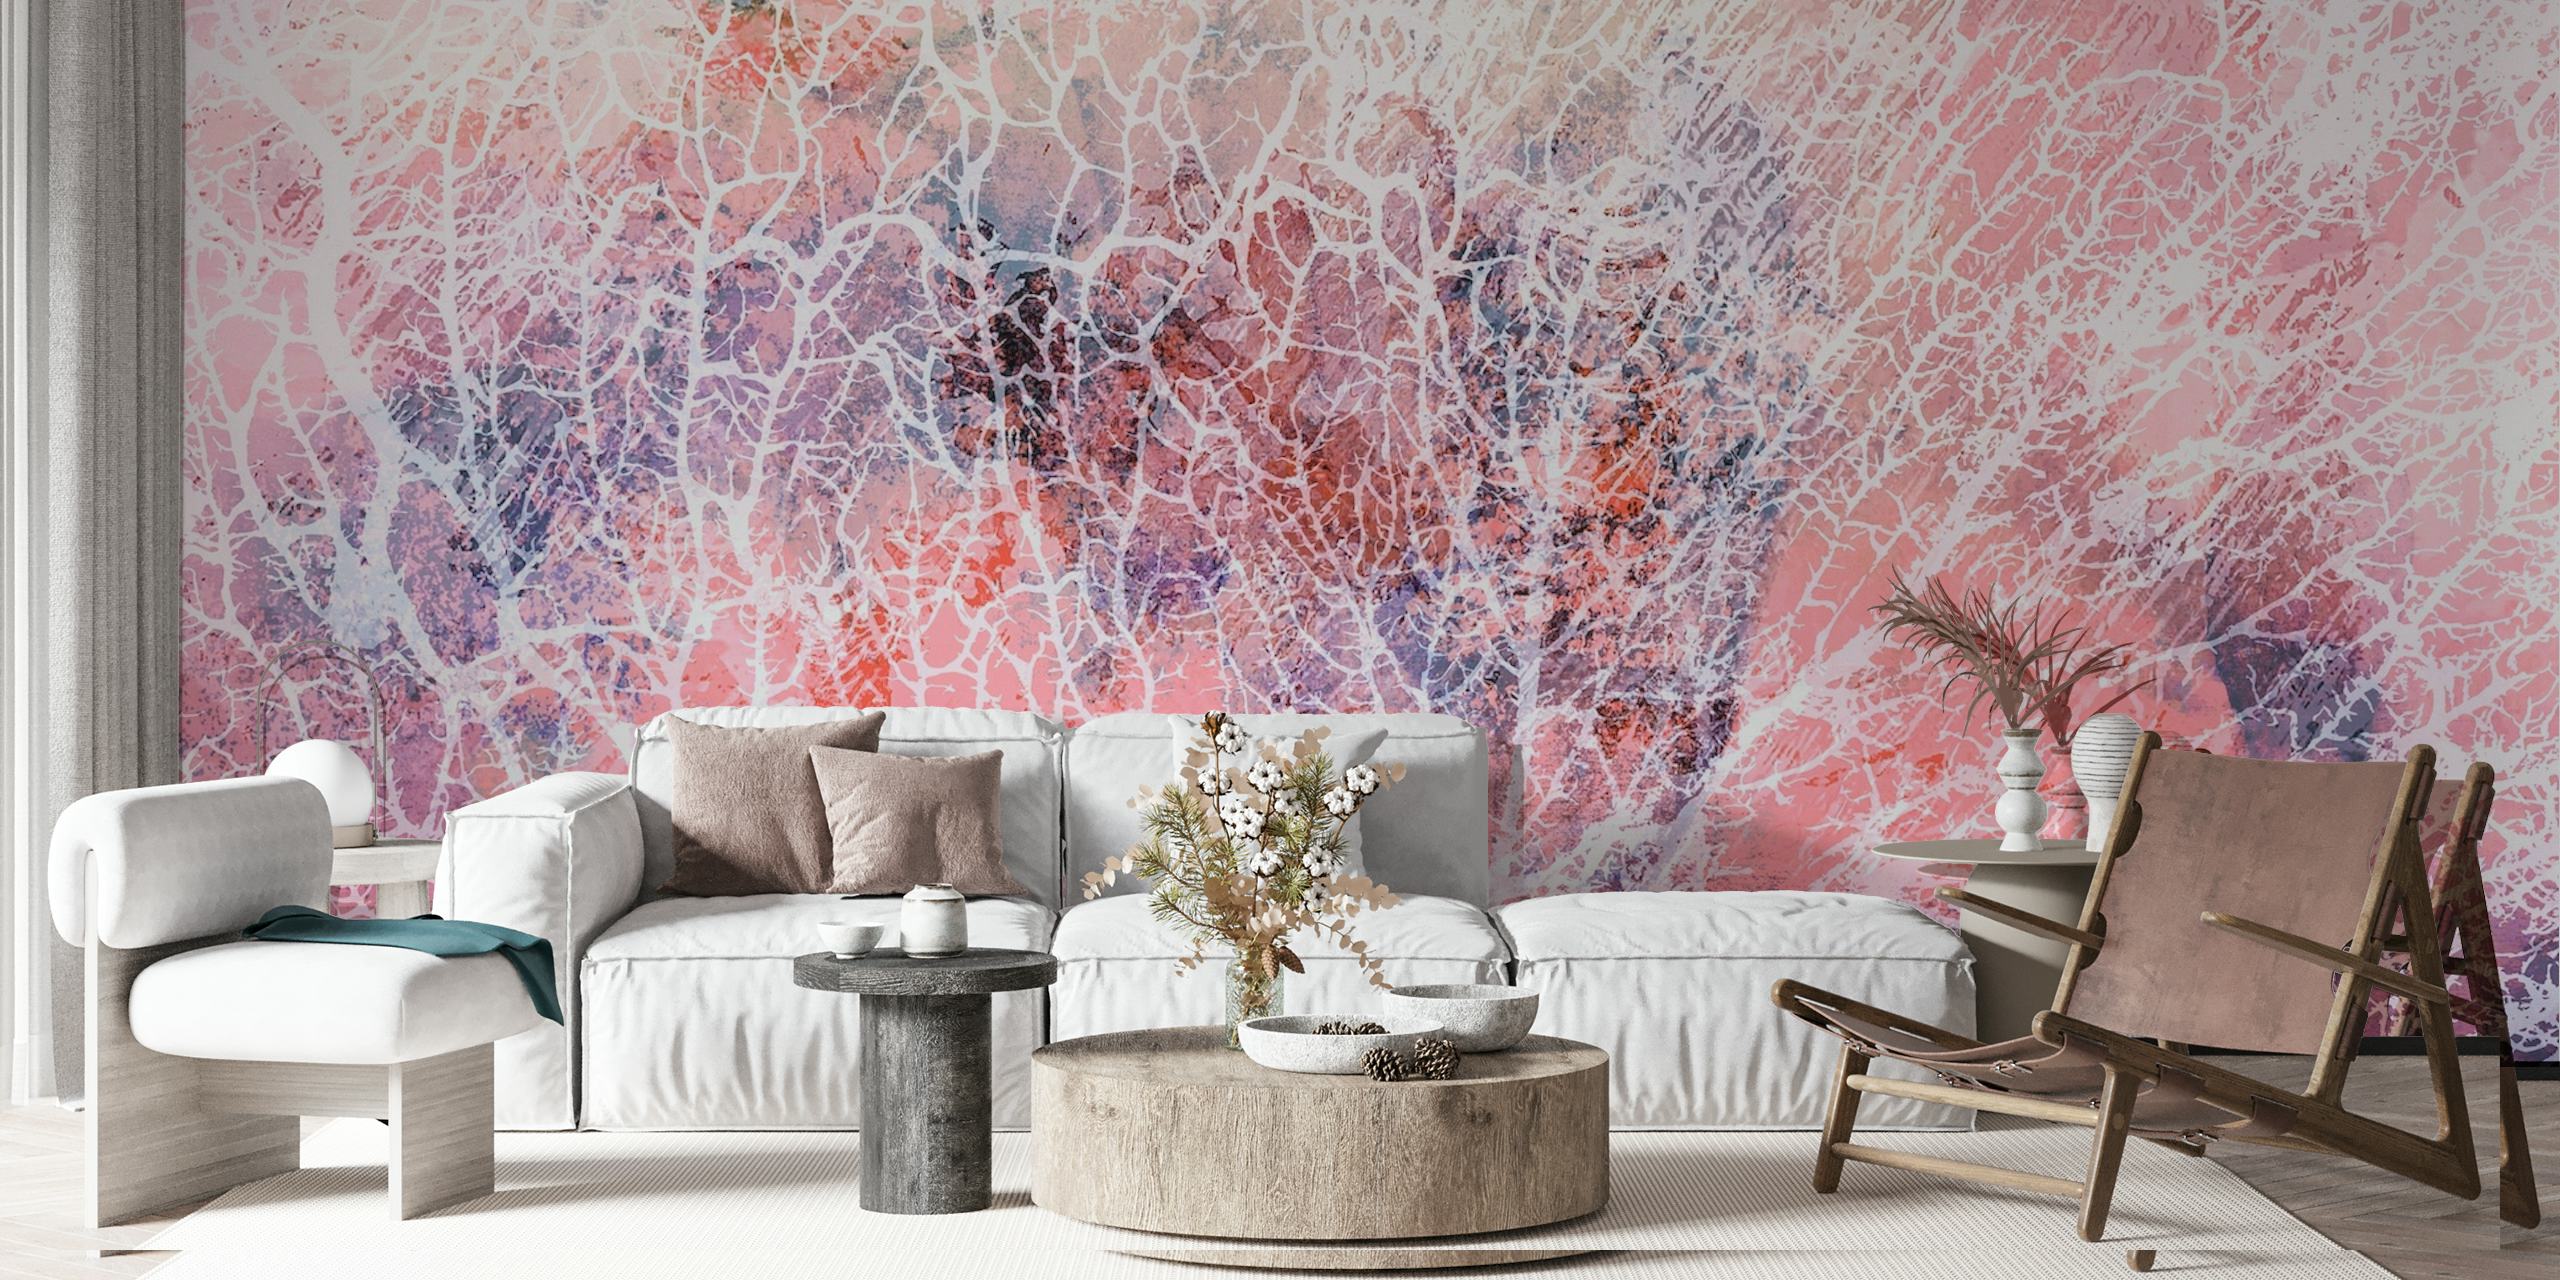 Corall Sunrise Reef wallpaper